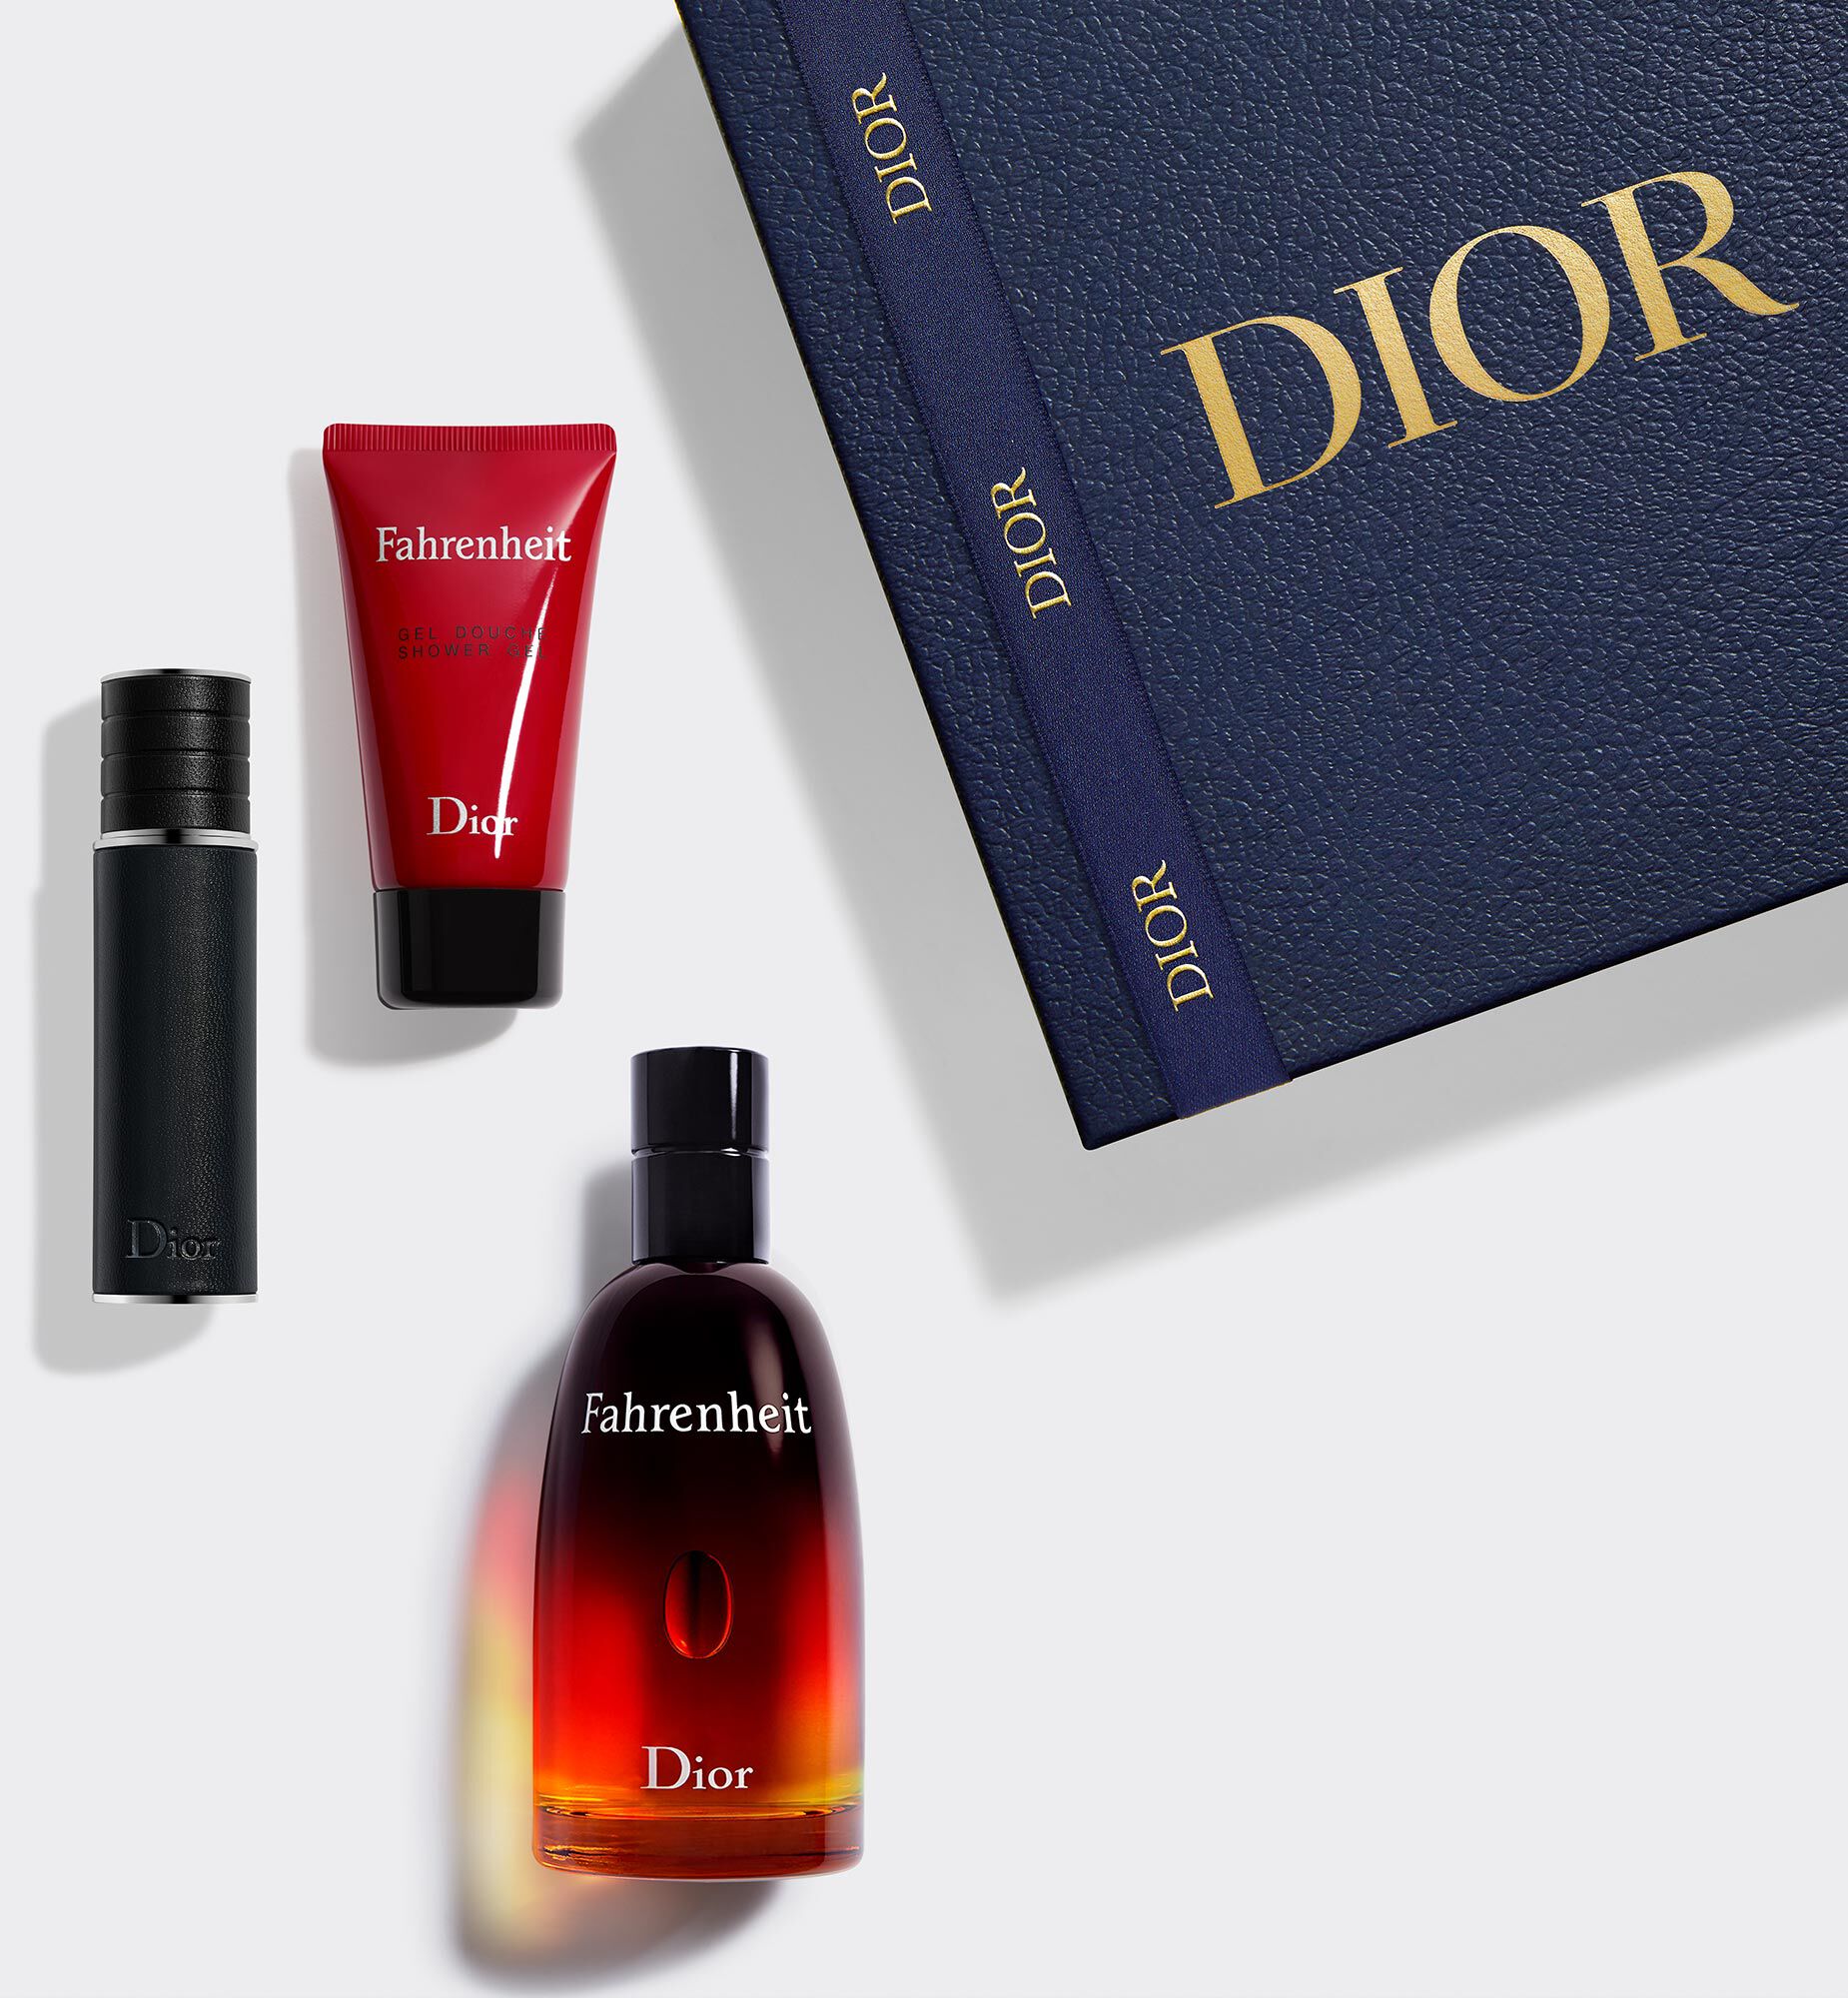 Dior Eau Sauvage 100ml 7195  Perfume Price